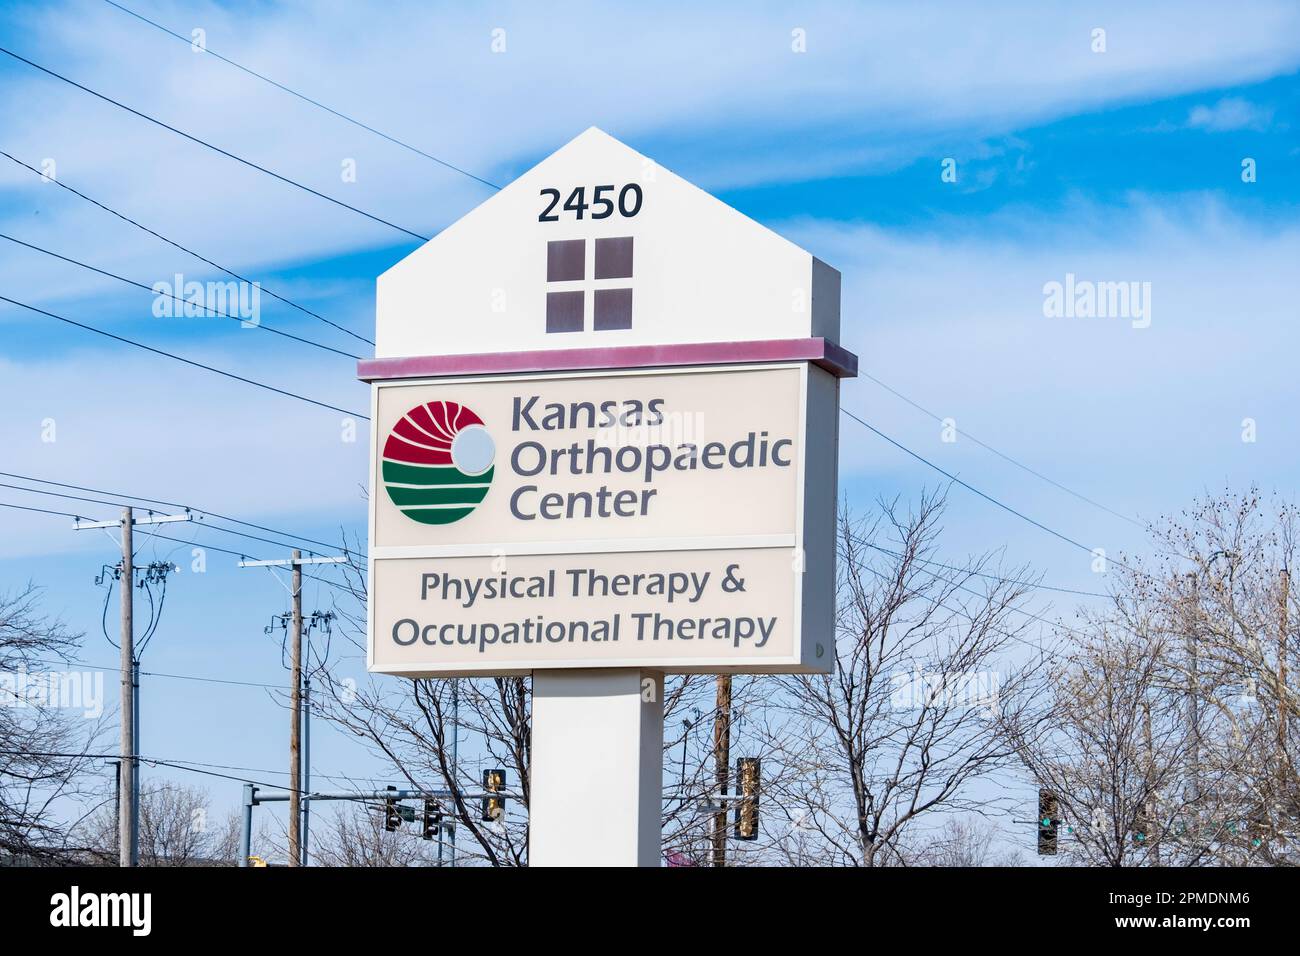 Pole-Schild mit Werbung für das Kansas Orthopaedic Center for Physical Therapy & Occupational Therapy in Wichita, Kansas, USA. Stockfoto